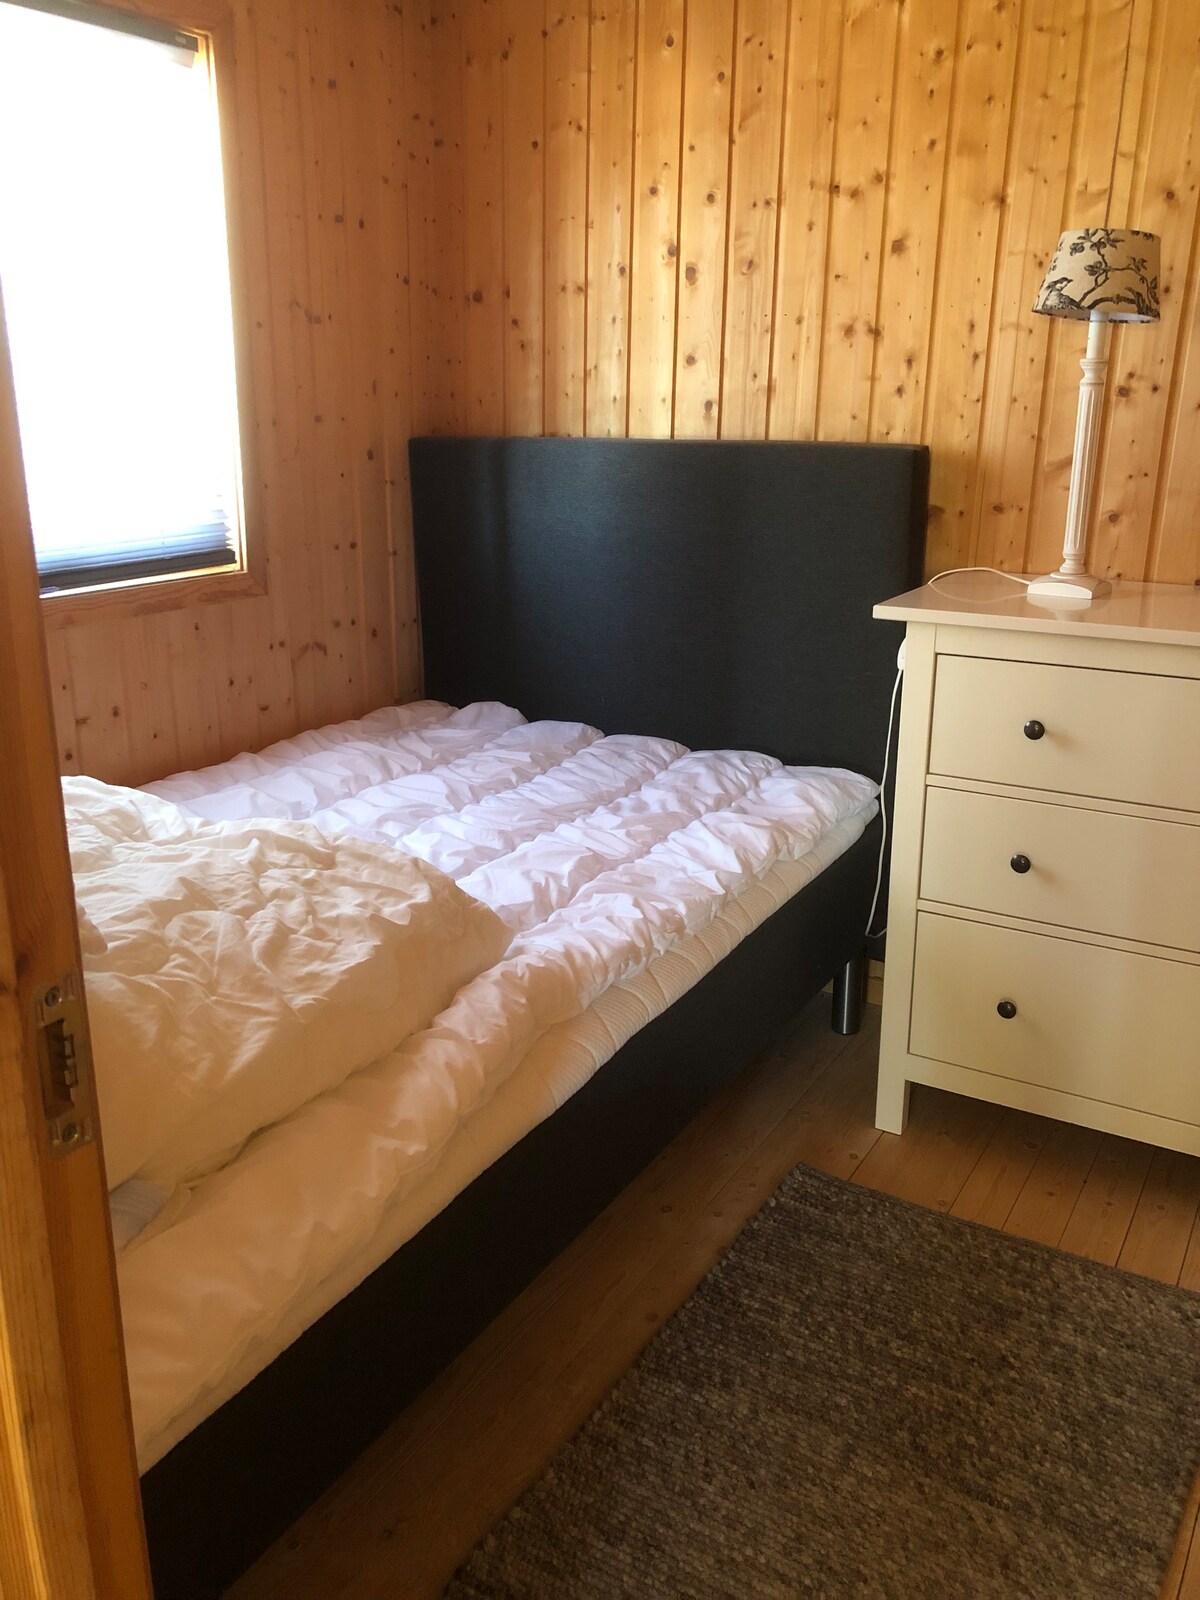 Synnfjellet有两间卧室的小木屋